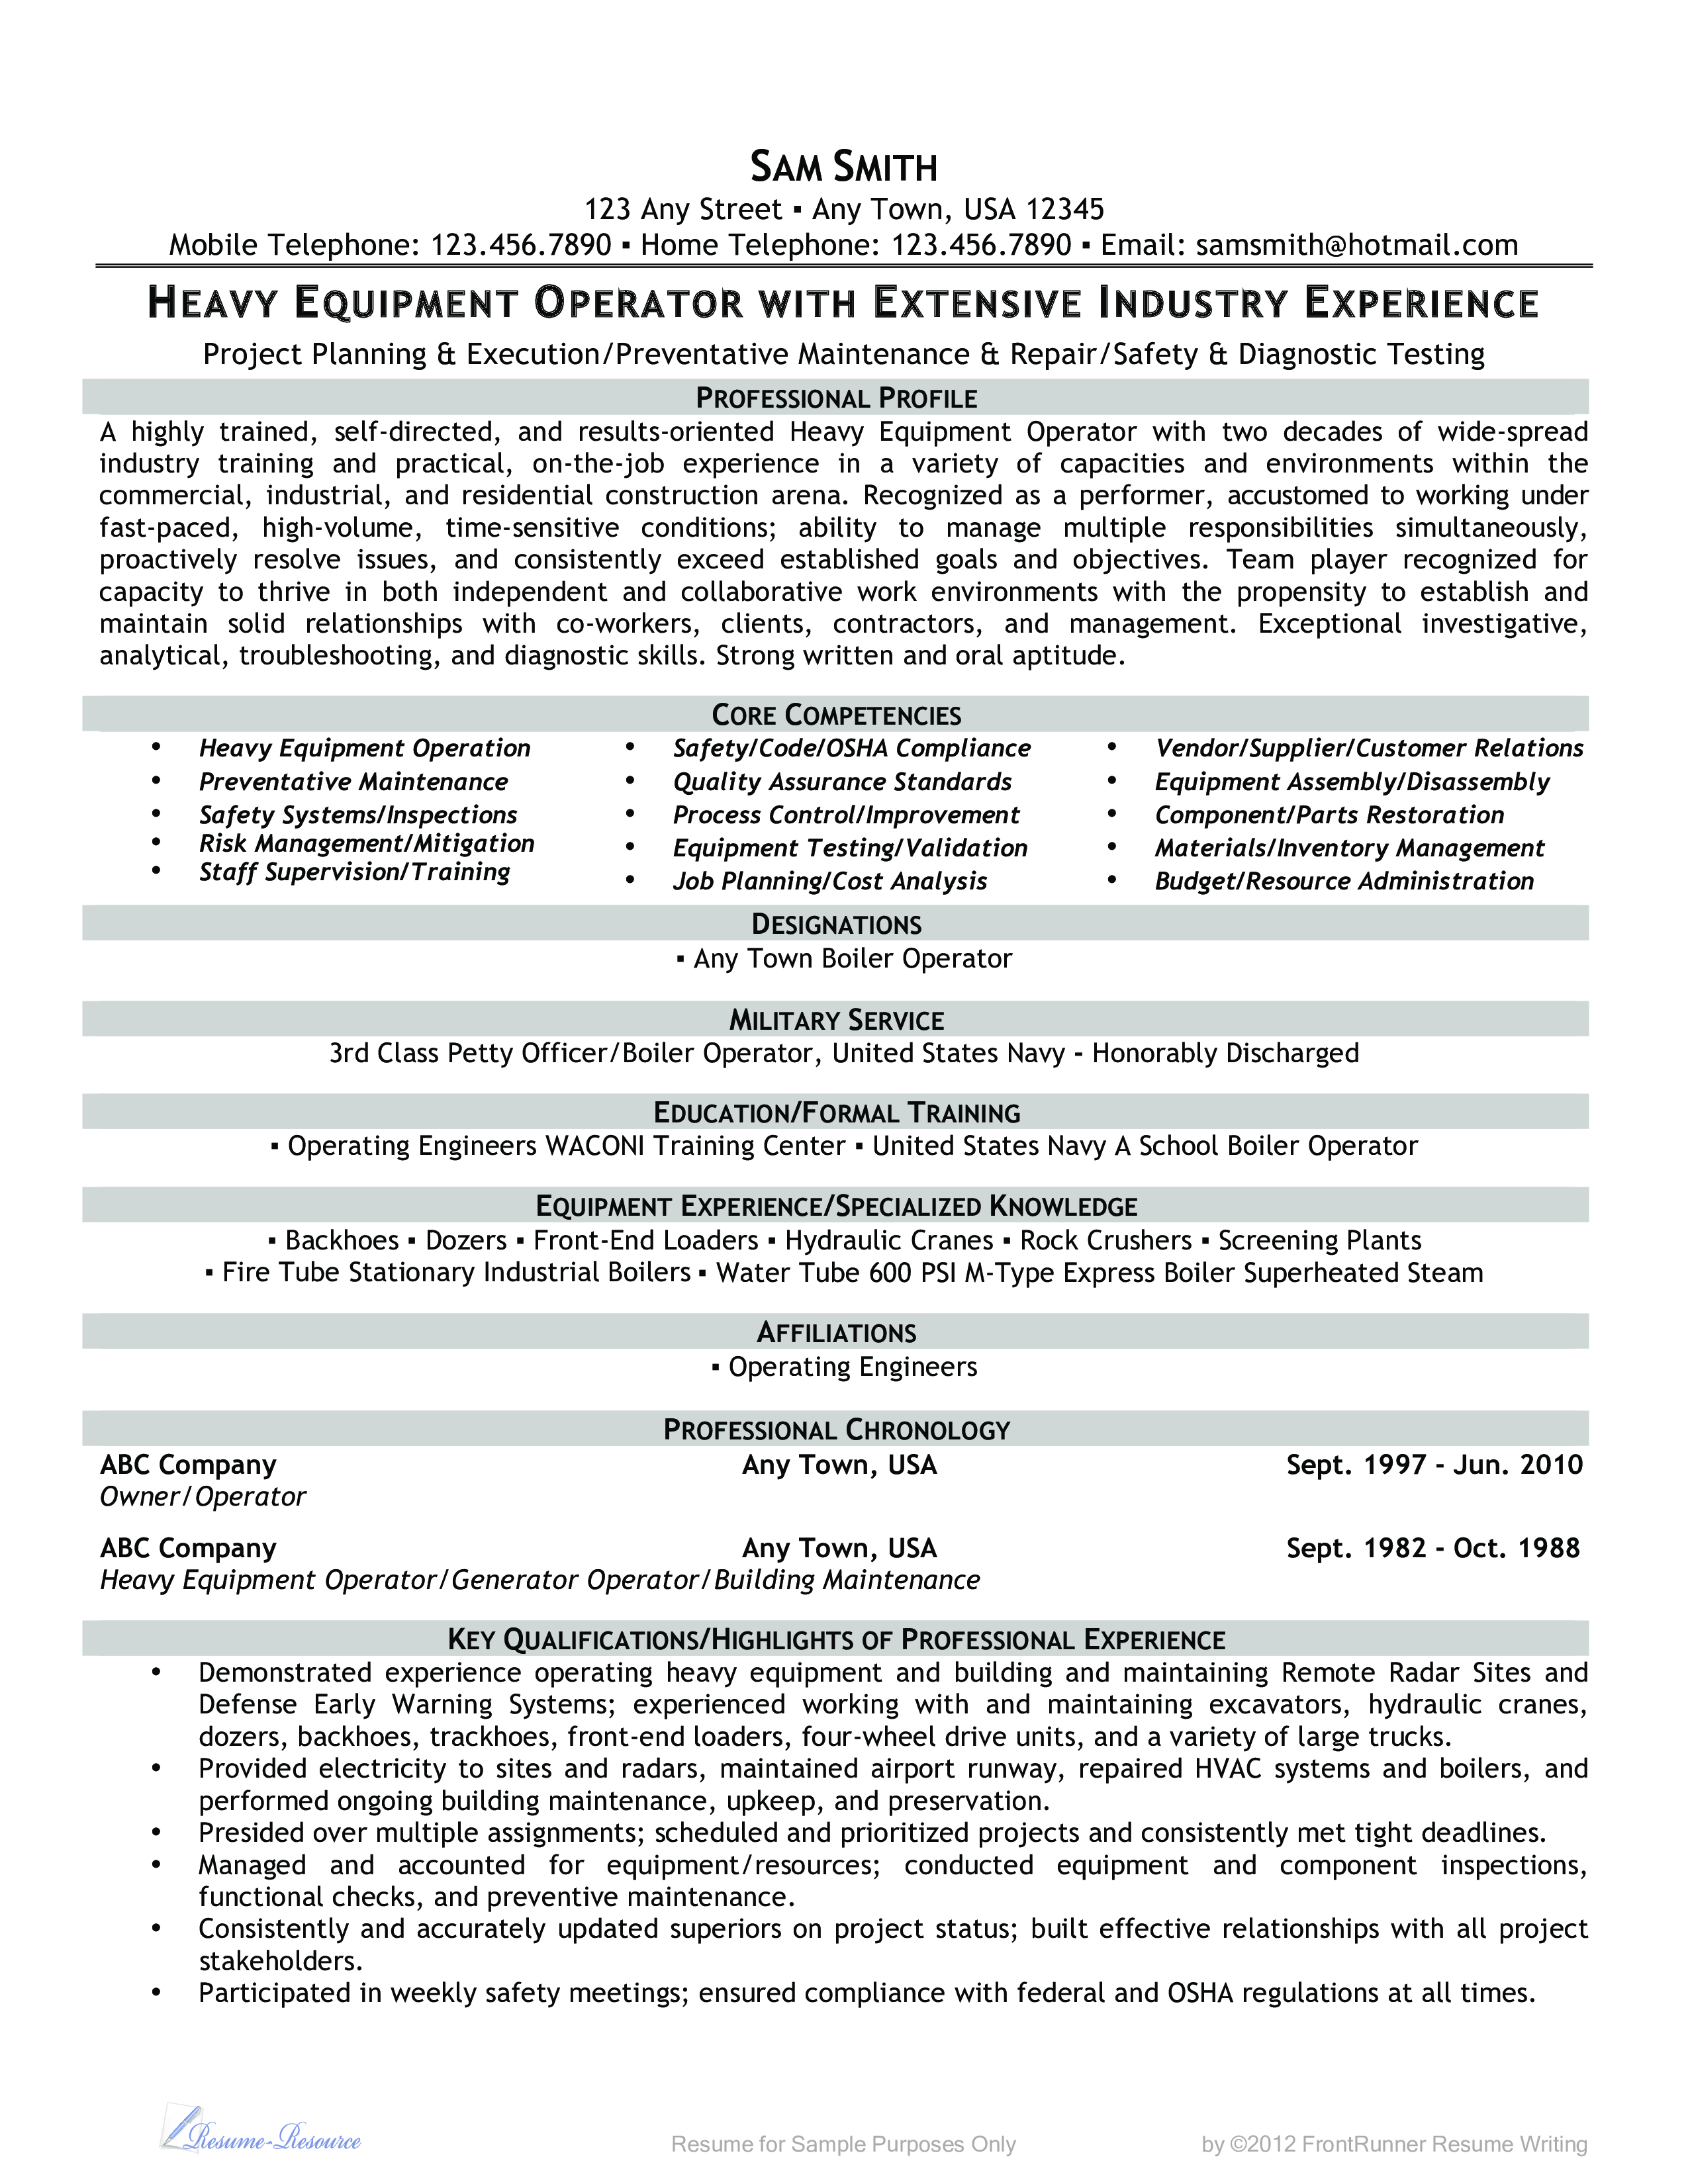 Heavy Equipment Operator CV 模板